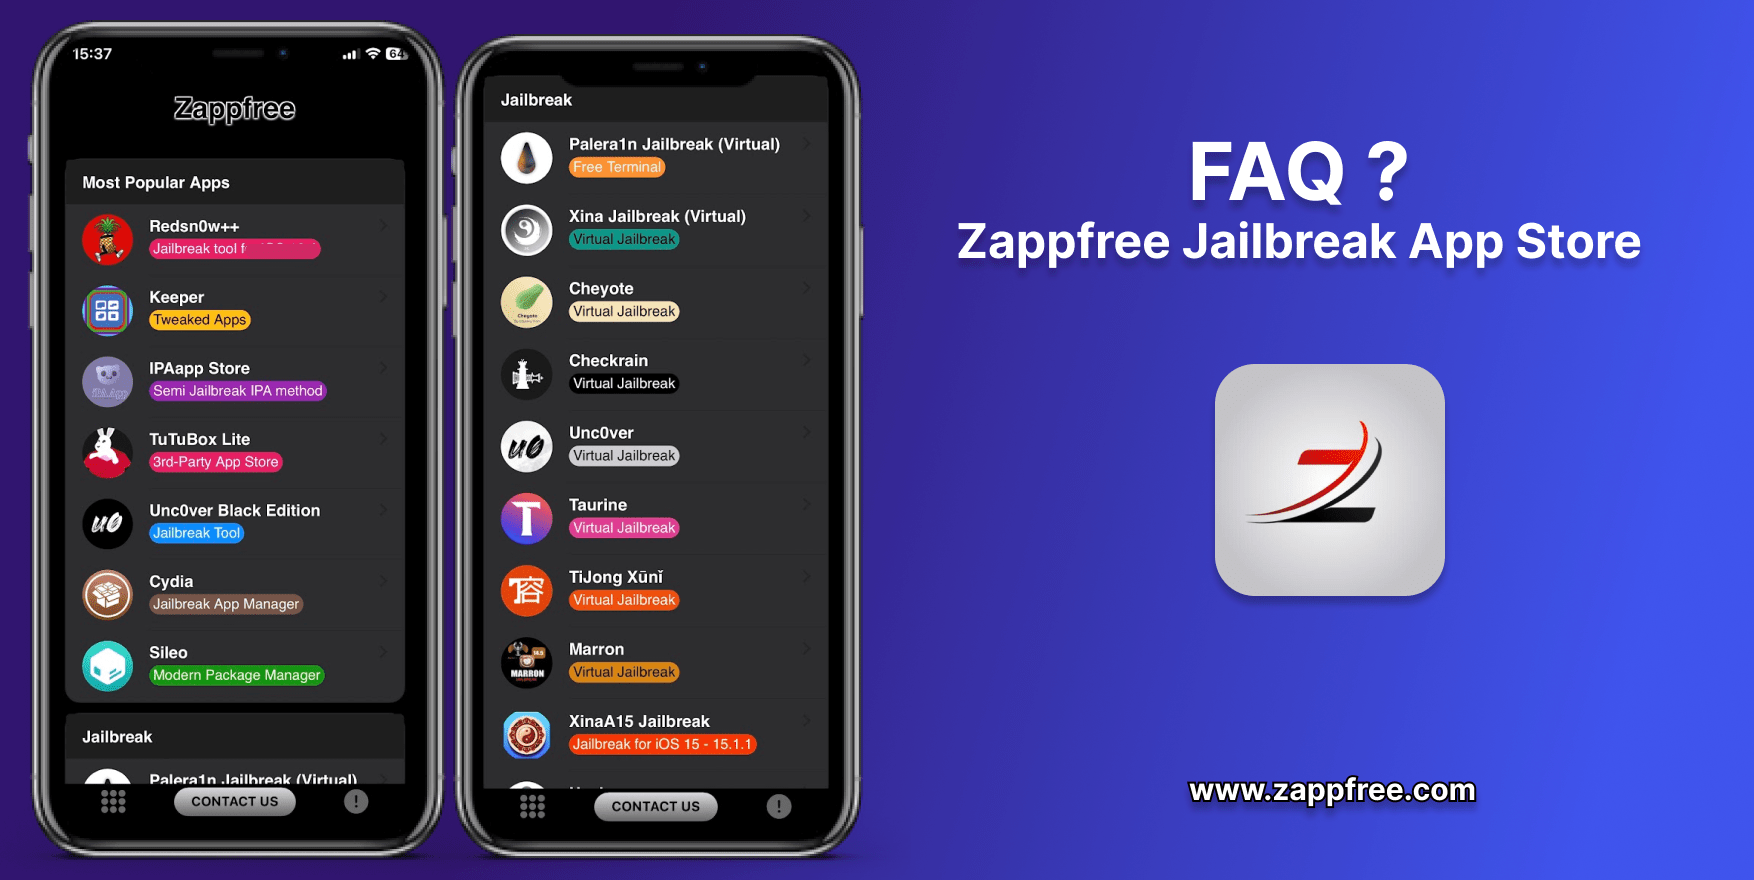 Zappfree Jailbreak App Store FAQ